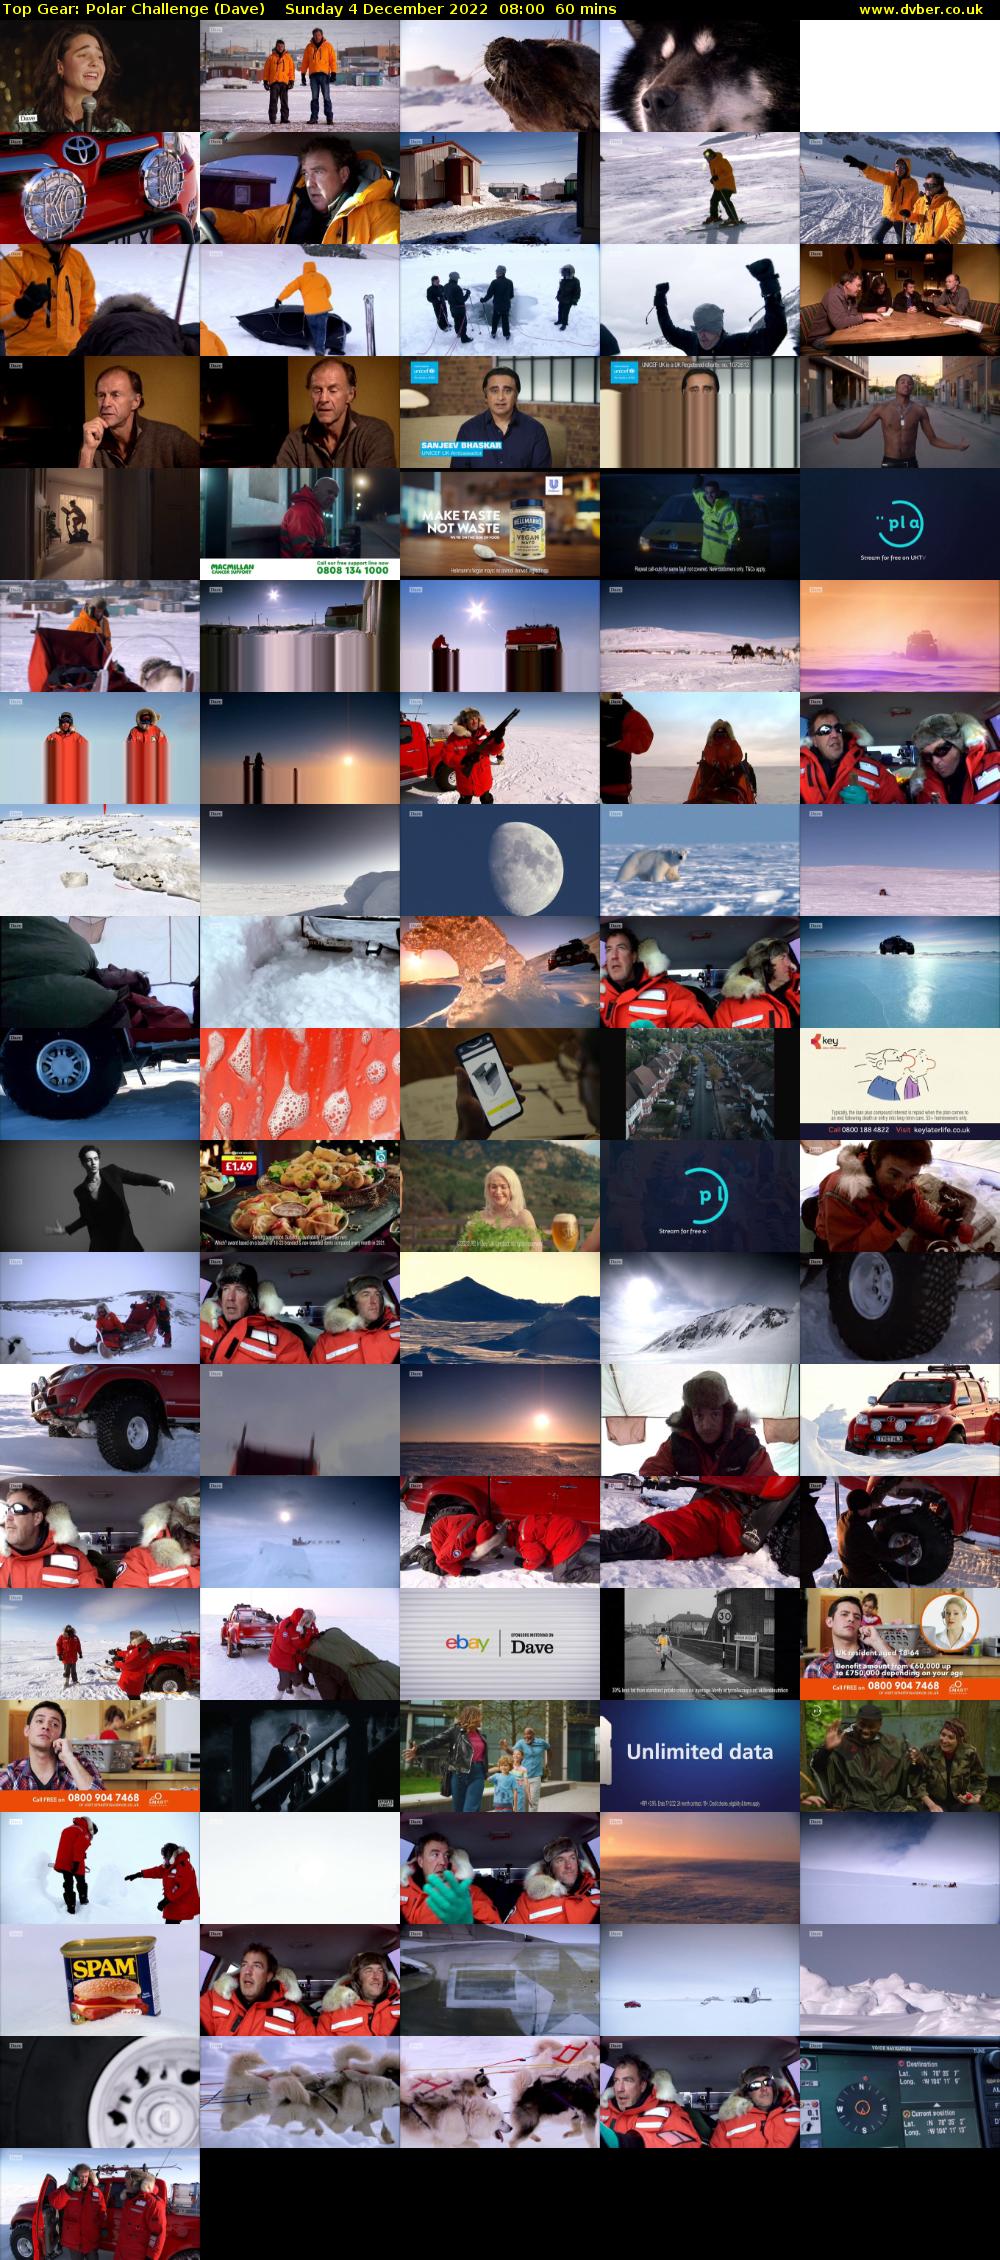 Top Gear: Polar Challenge (Dave) Sunday 4 December 2022 08:00 - 09:00